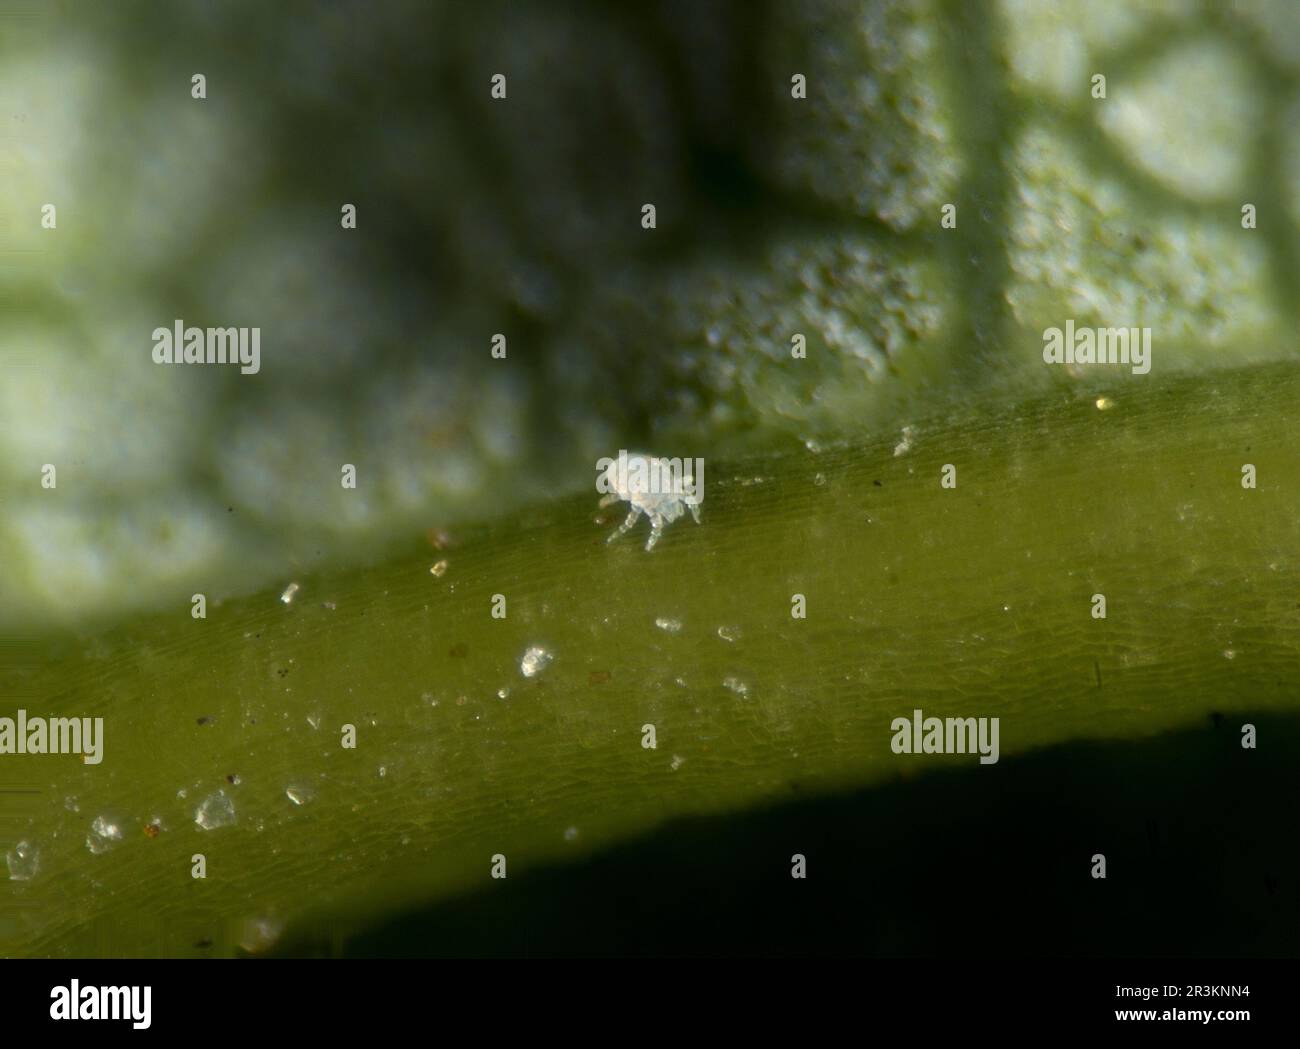 Sycamore gall mite, Aceria sp. Stock Photo